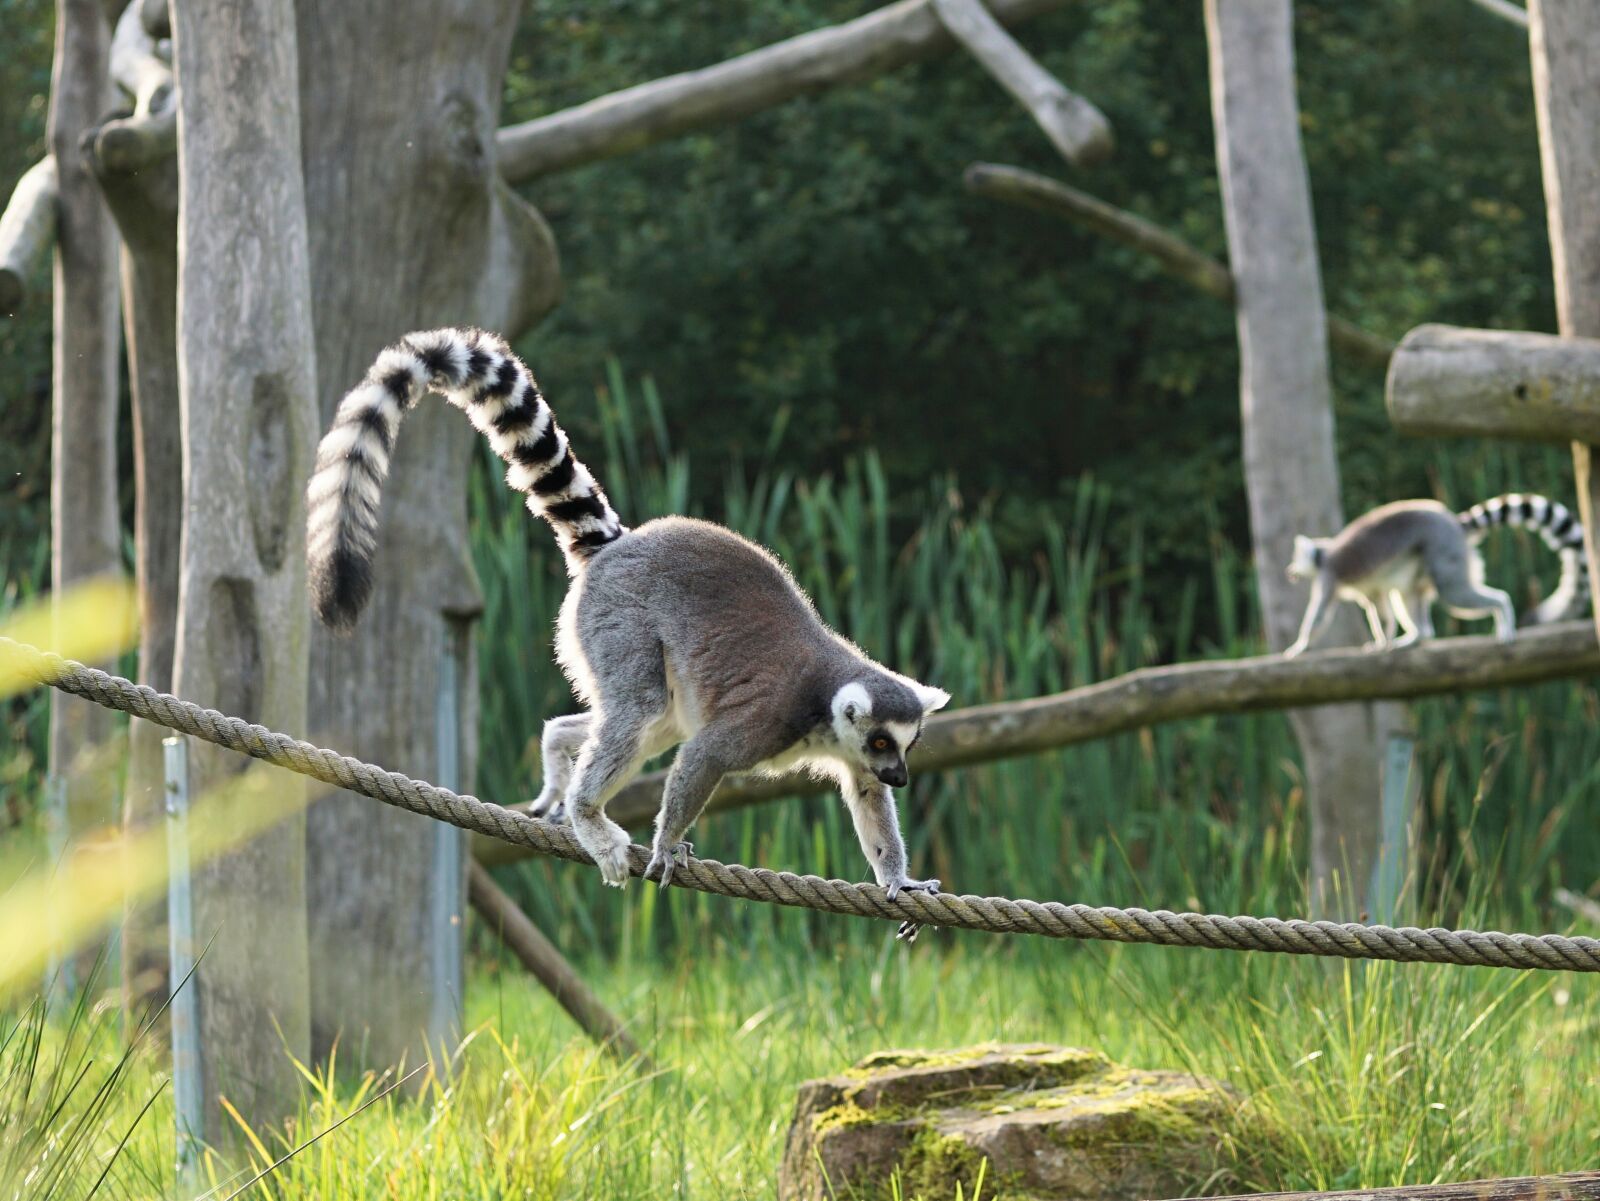 Sony a6000 sample photo. Ring tailed lemur, lemur photography